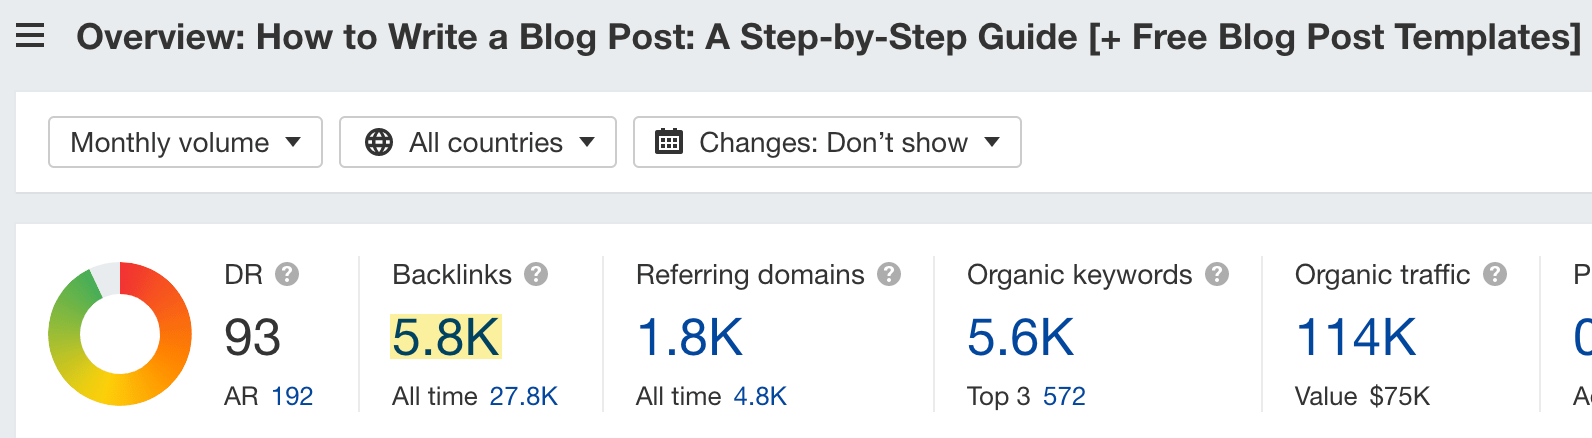 Number of backlinks for a blog post, via Ahrefs' Site Explorer